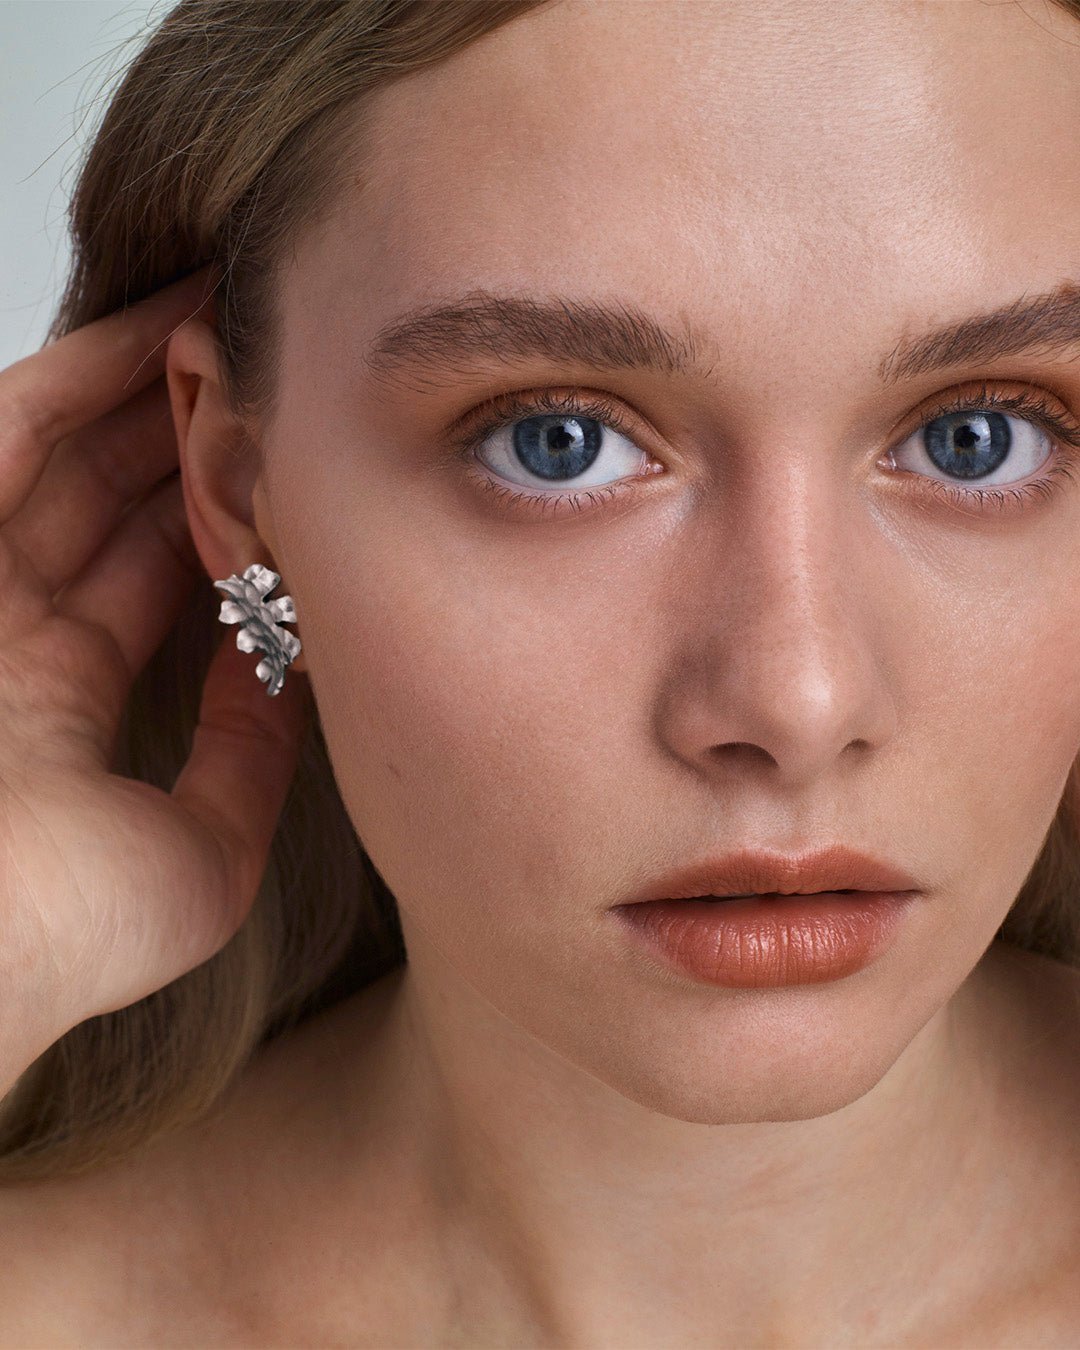 Tundra earrings small bronze half pair left